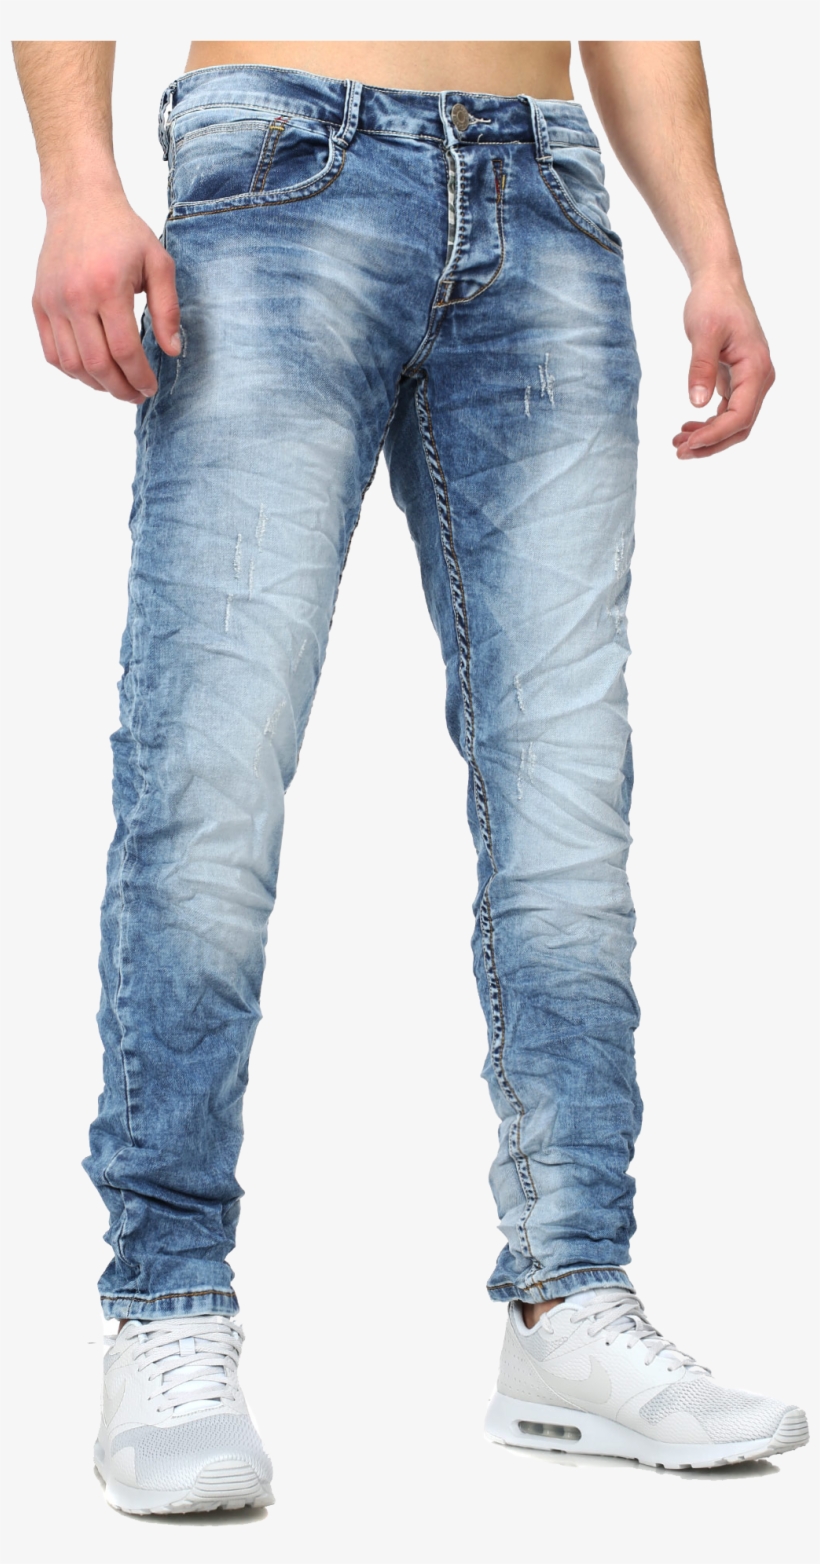 Men's Denim Jeans Washes, transparent png #2525164